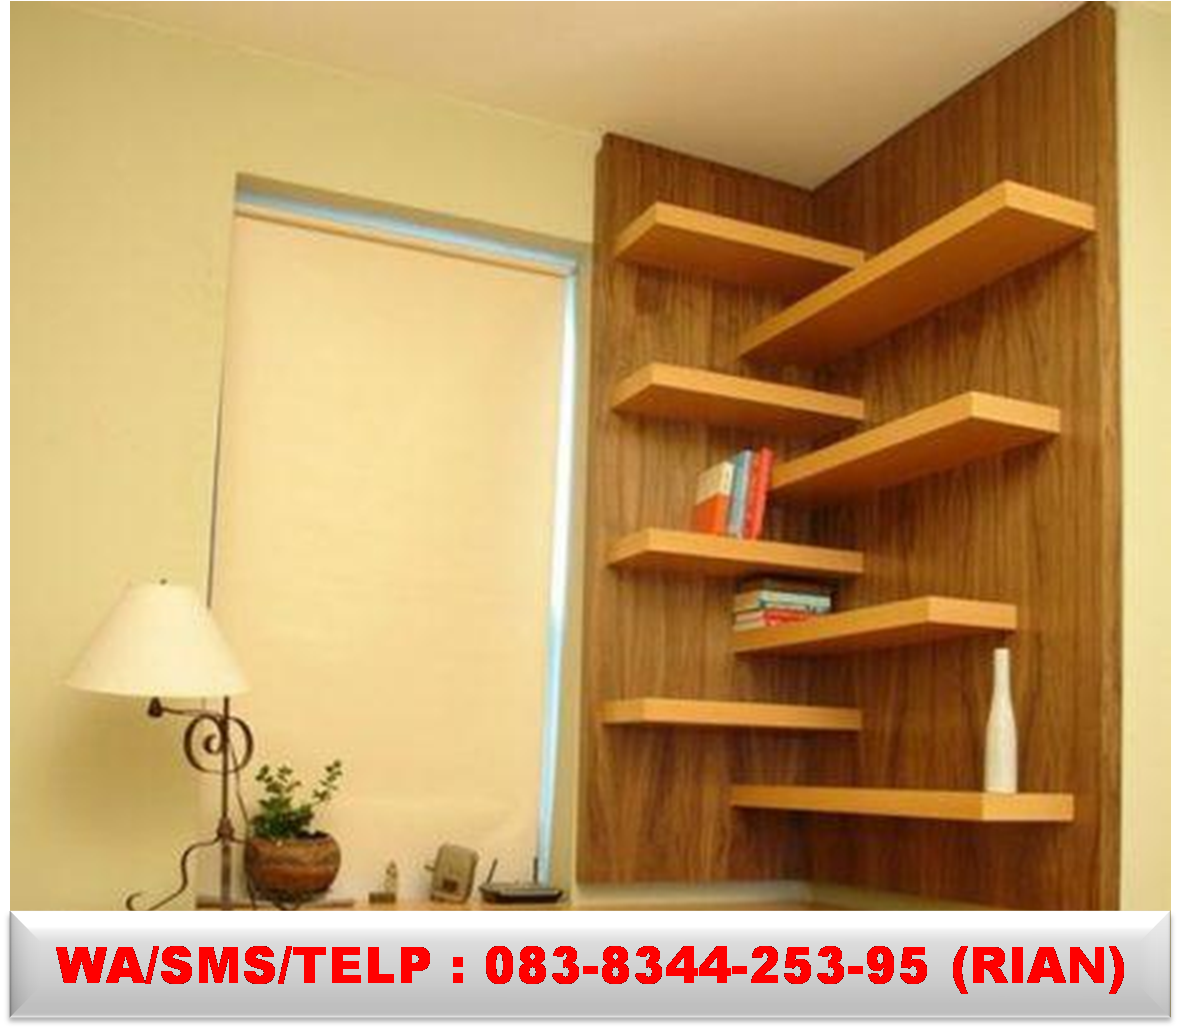 tempat jual wallpaper dinding,shelf,shelving,furniture,bookcase,wall